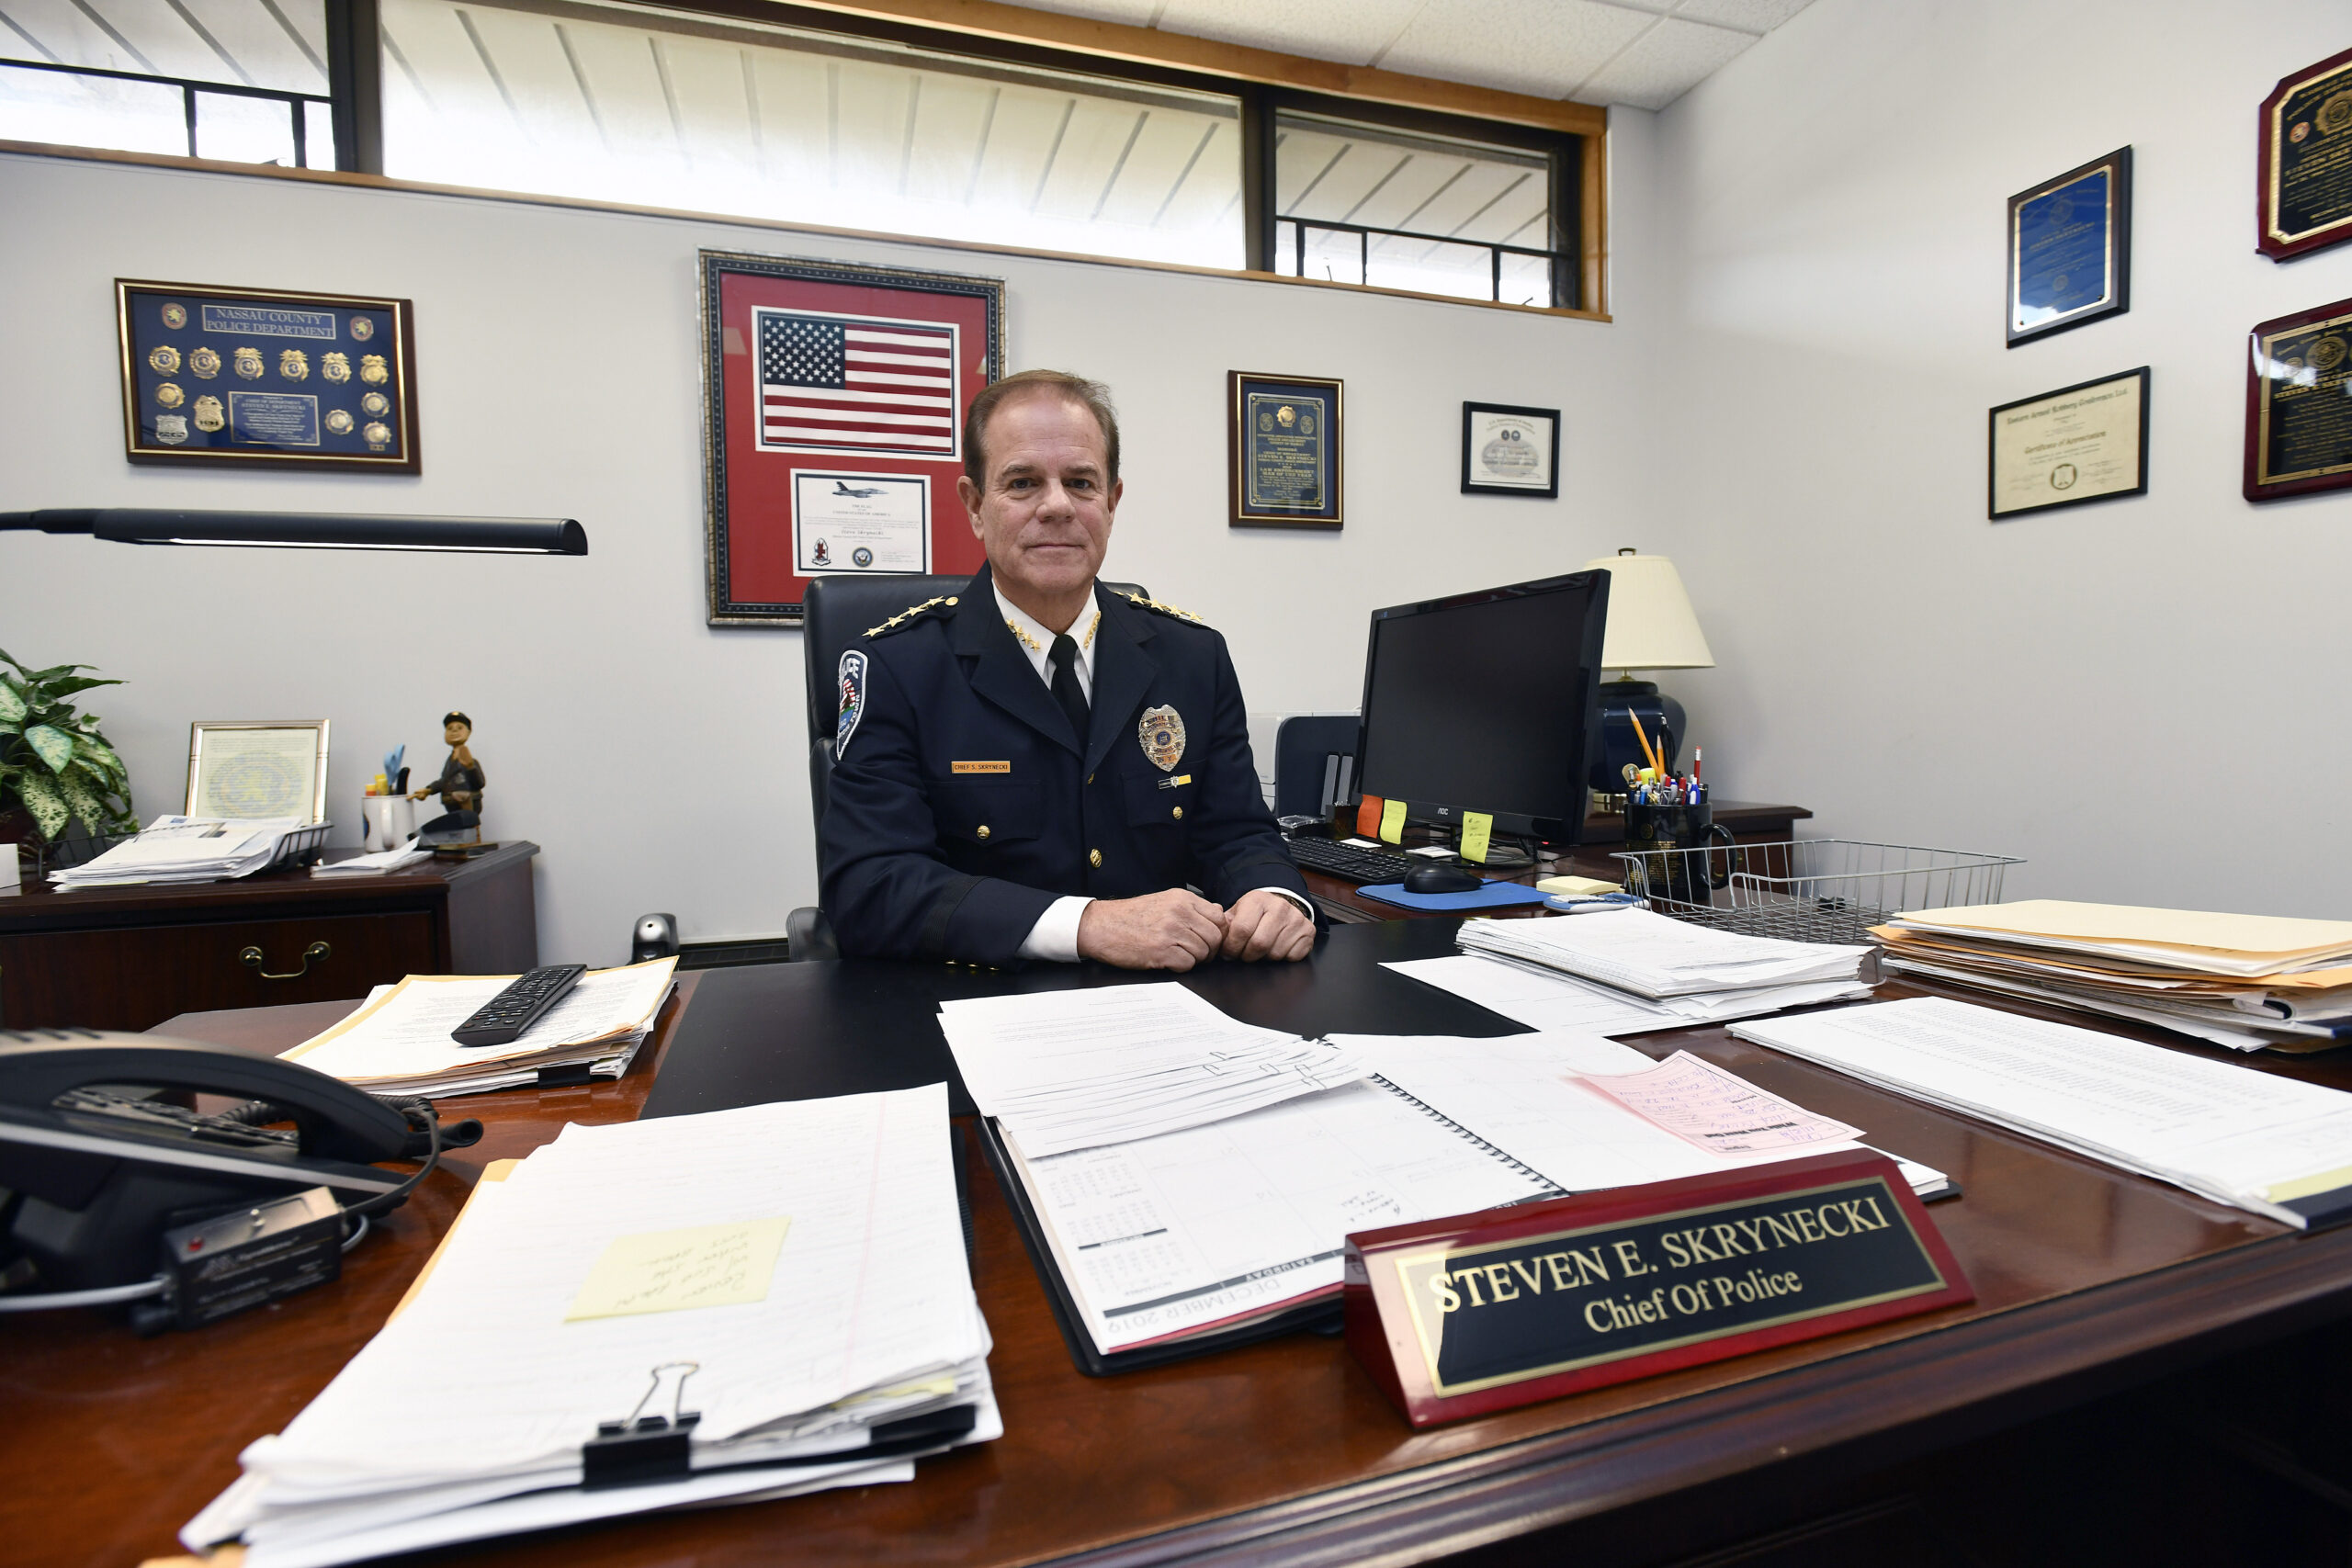 Chief Steven E. Skrynecki at his desk in 2019.  DANA SHAW